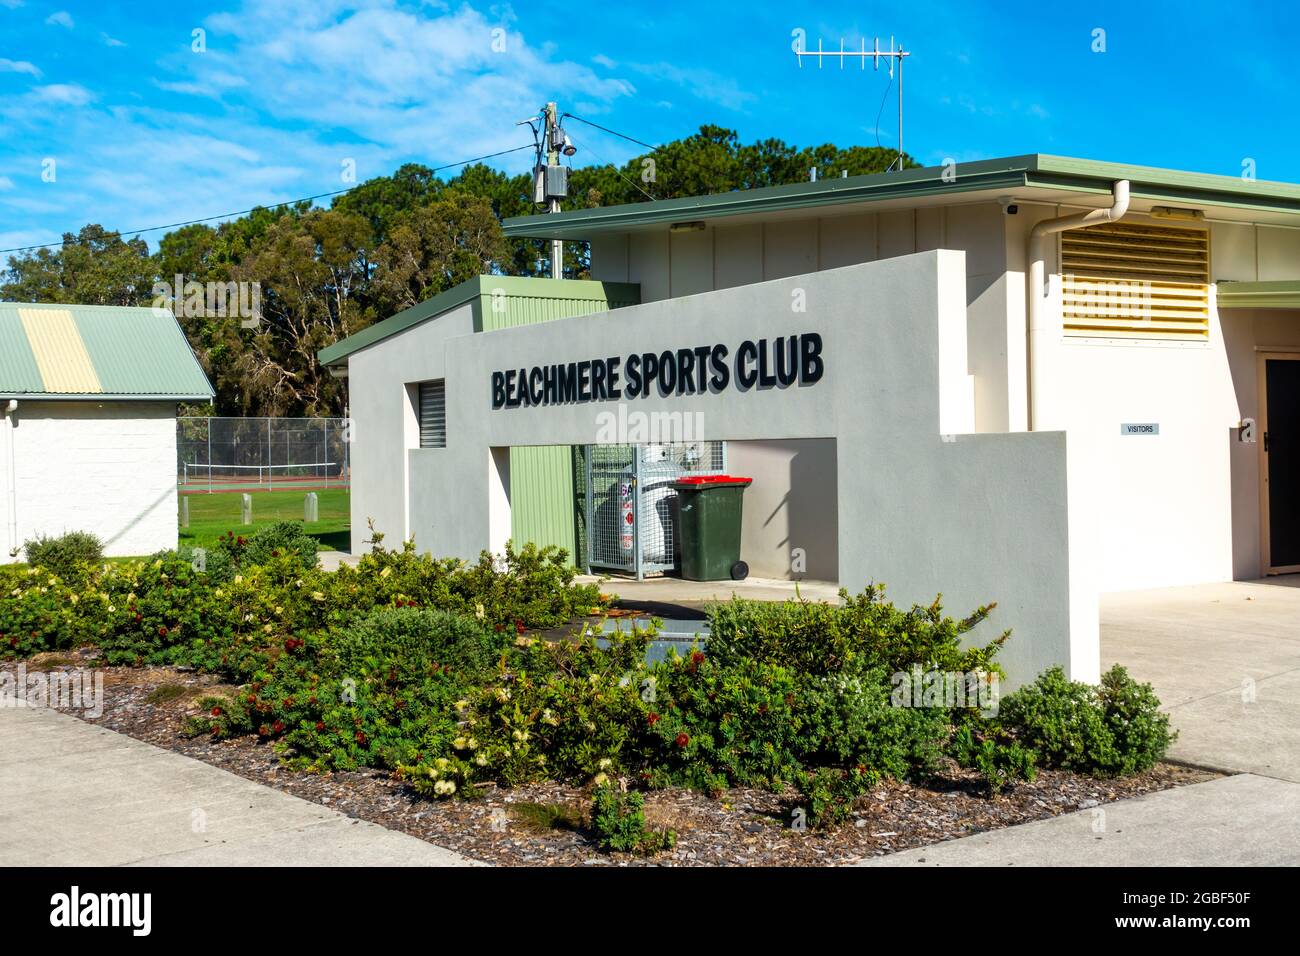 Beachmere Sports Club Stock Photo